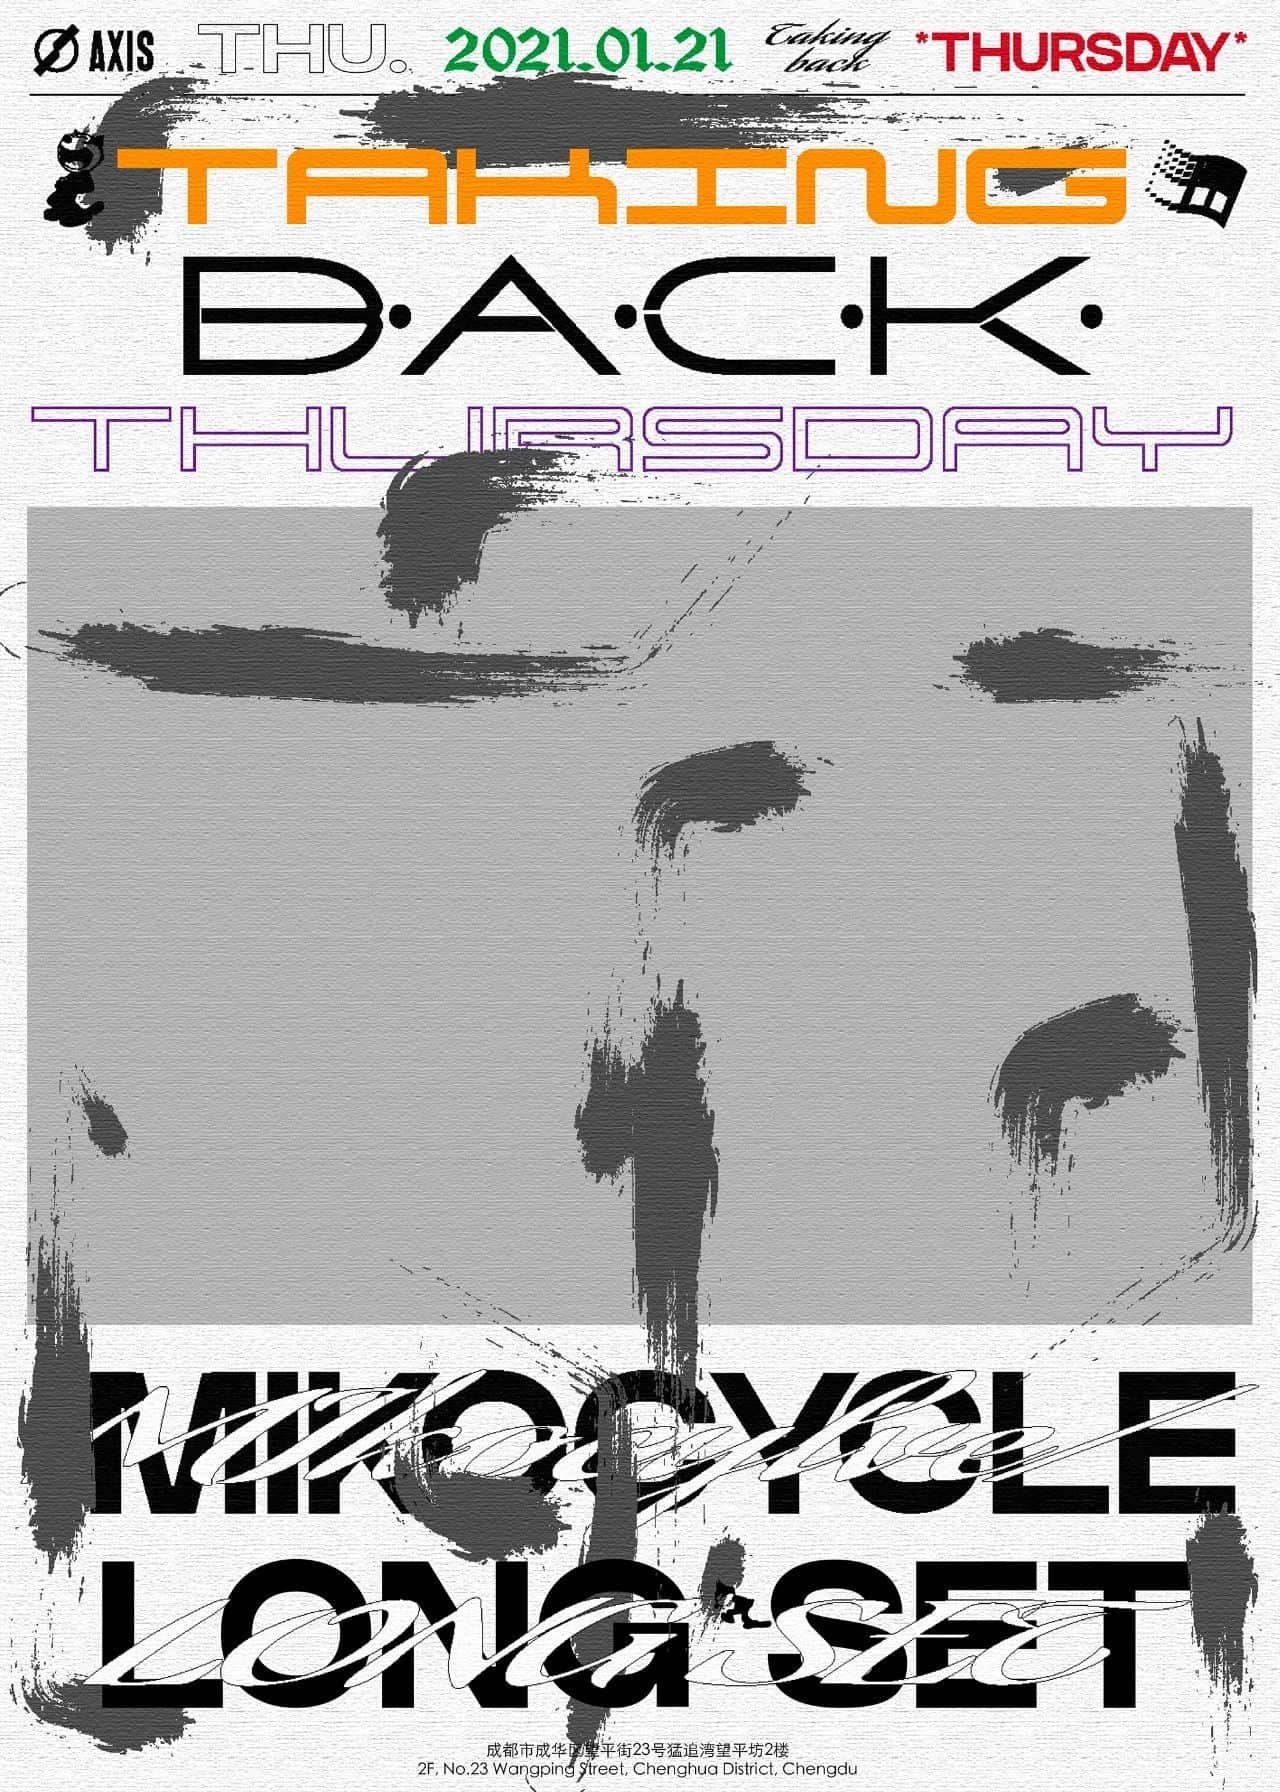 Jan. 21 : TBT MikoCycle Longset